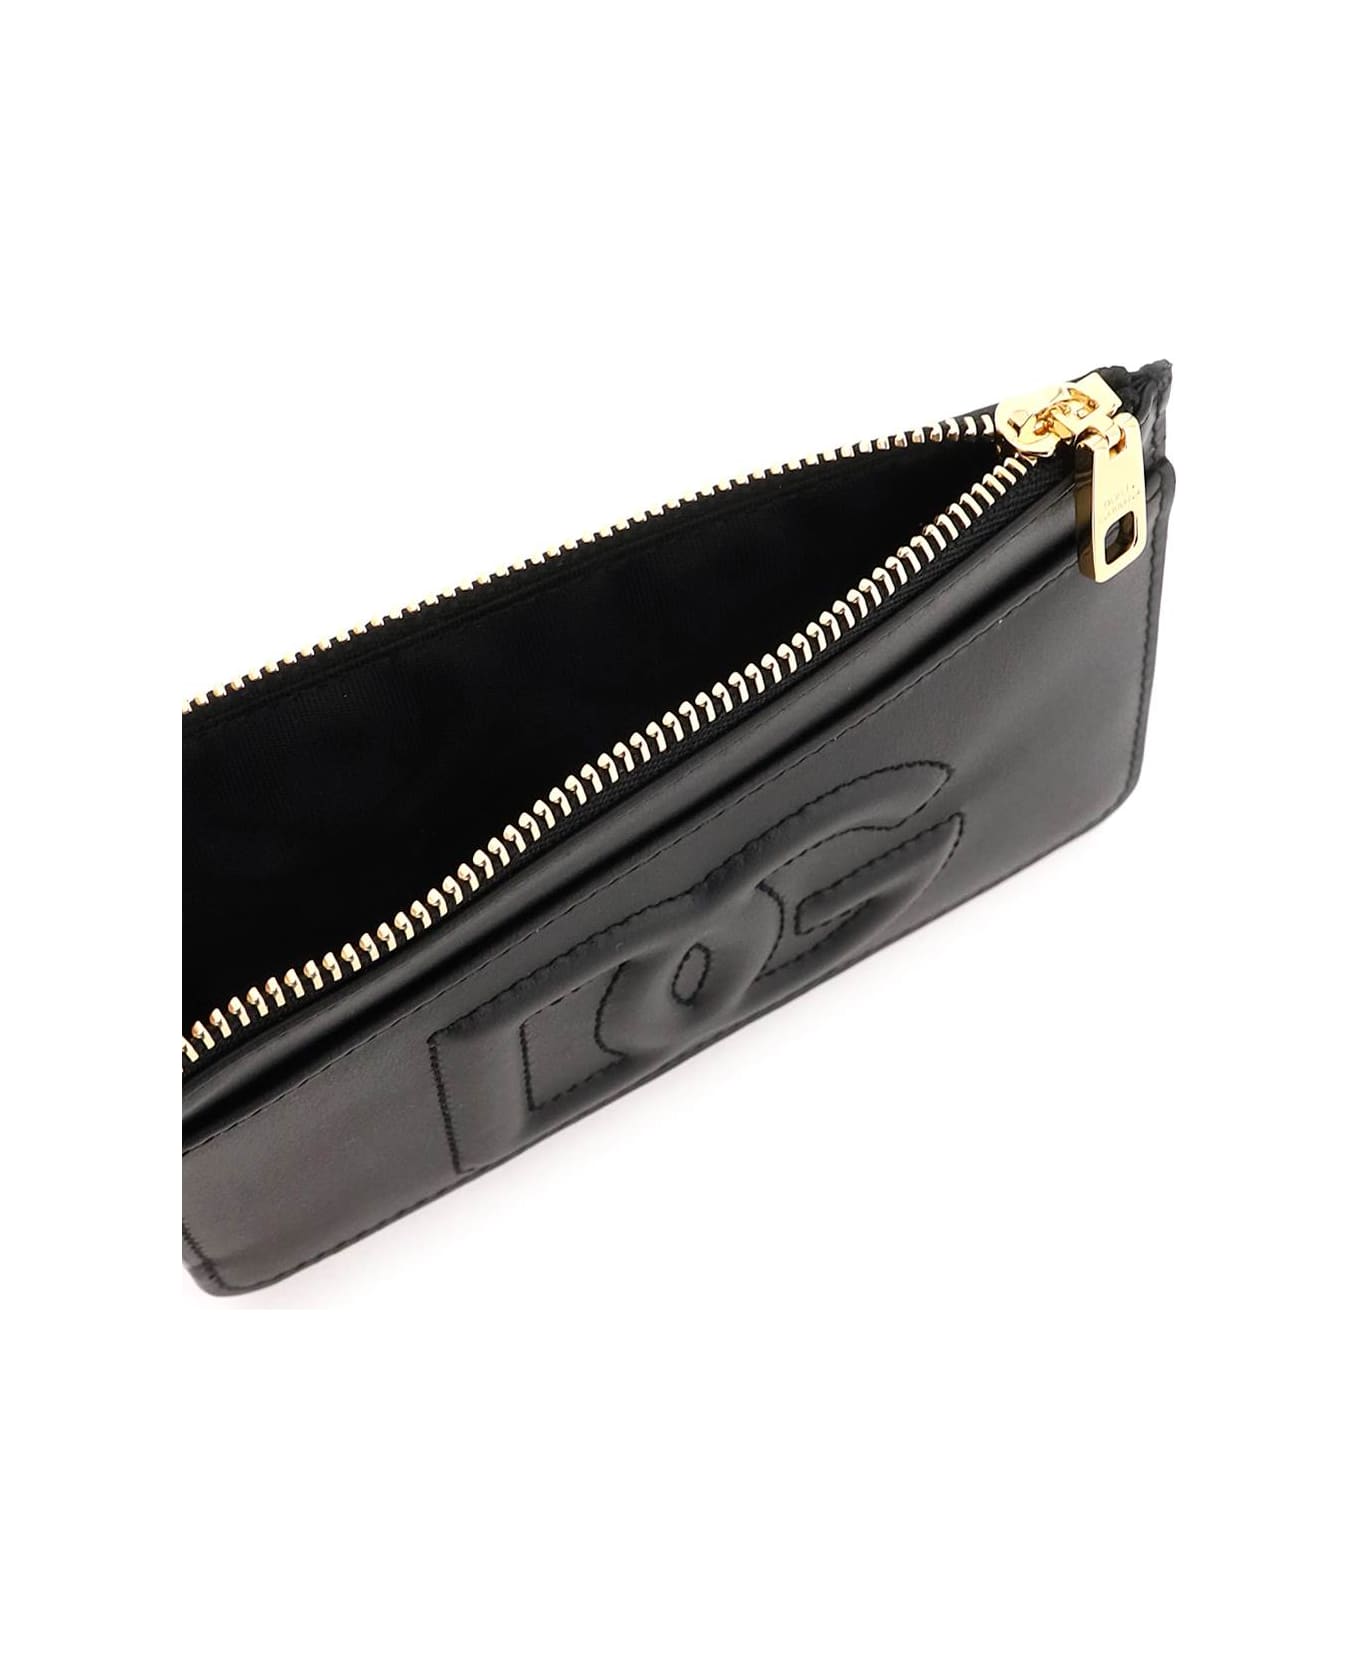 Dolce & Gabbana Logo Embossed Top Zip Card Holder - Black